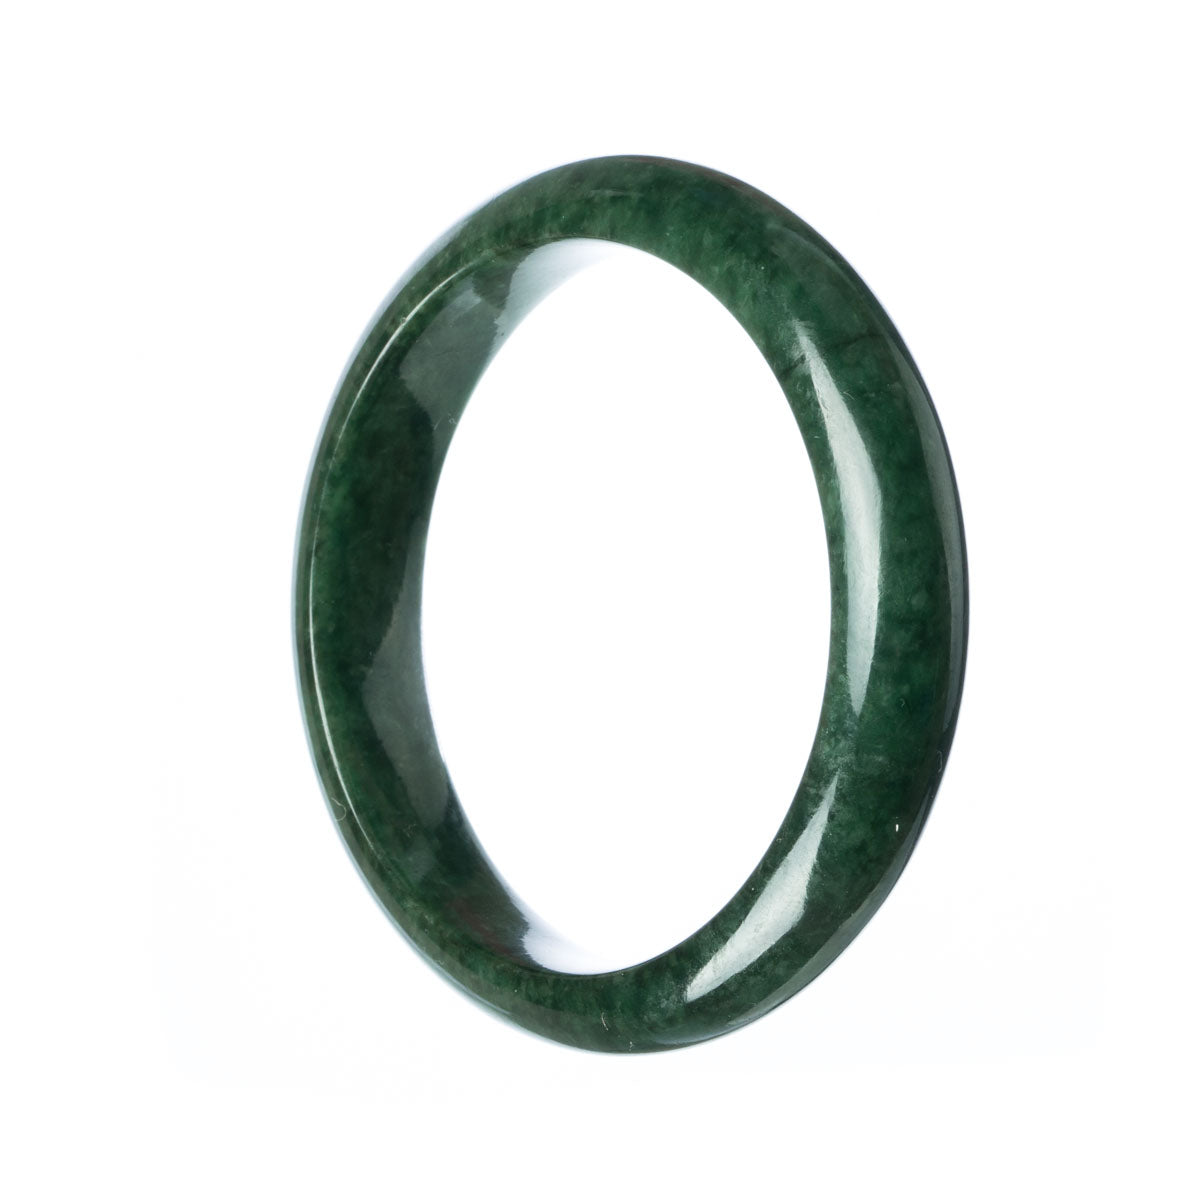 A dark green Burmese jade bangle bracelet with a semi-round shape, measuring 59mm in diameter.